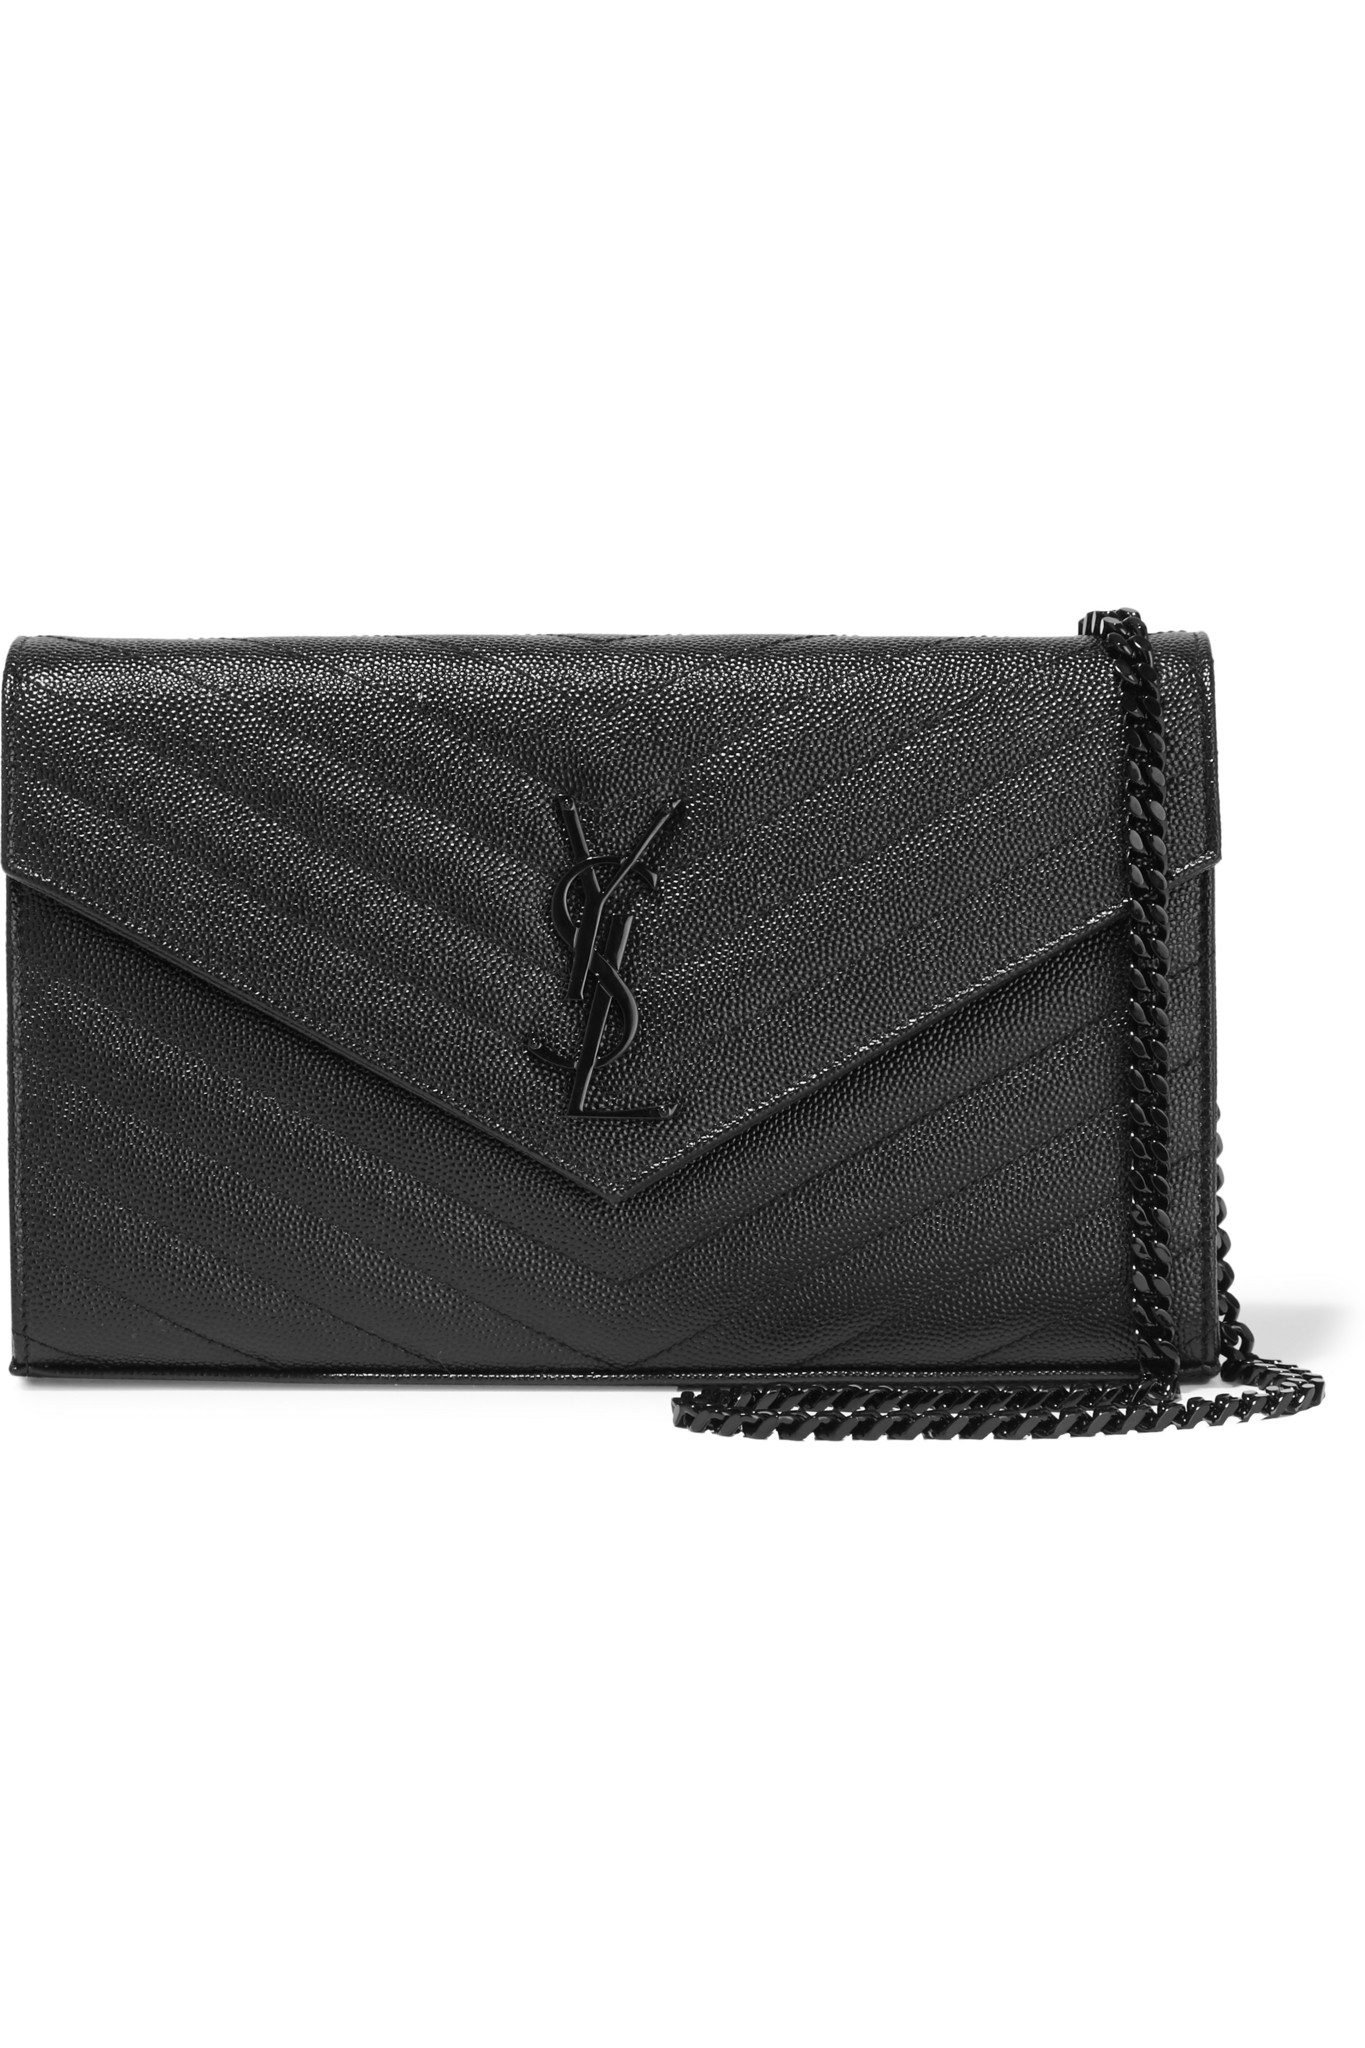 Saint laurent Monogramme Mini Quilted Textured-leather Shoulder Bag in Black | Lyst